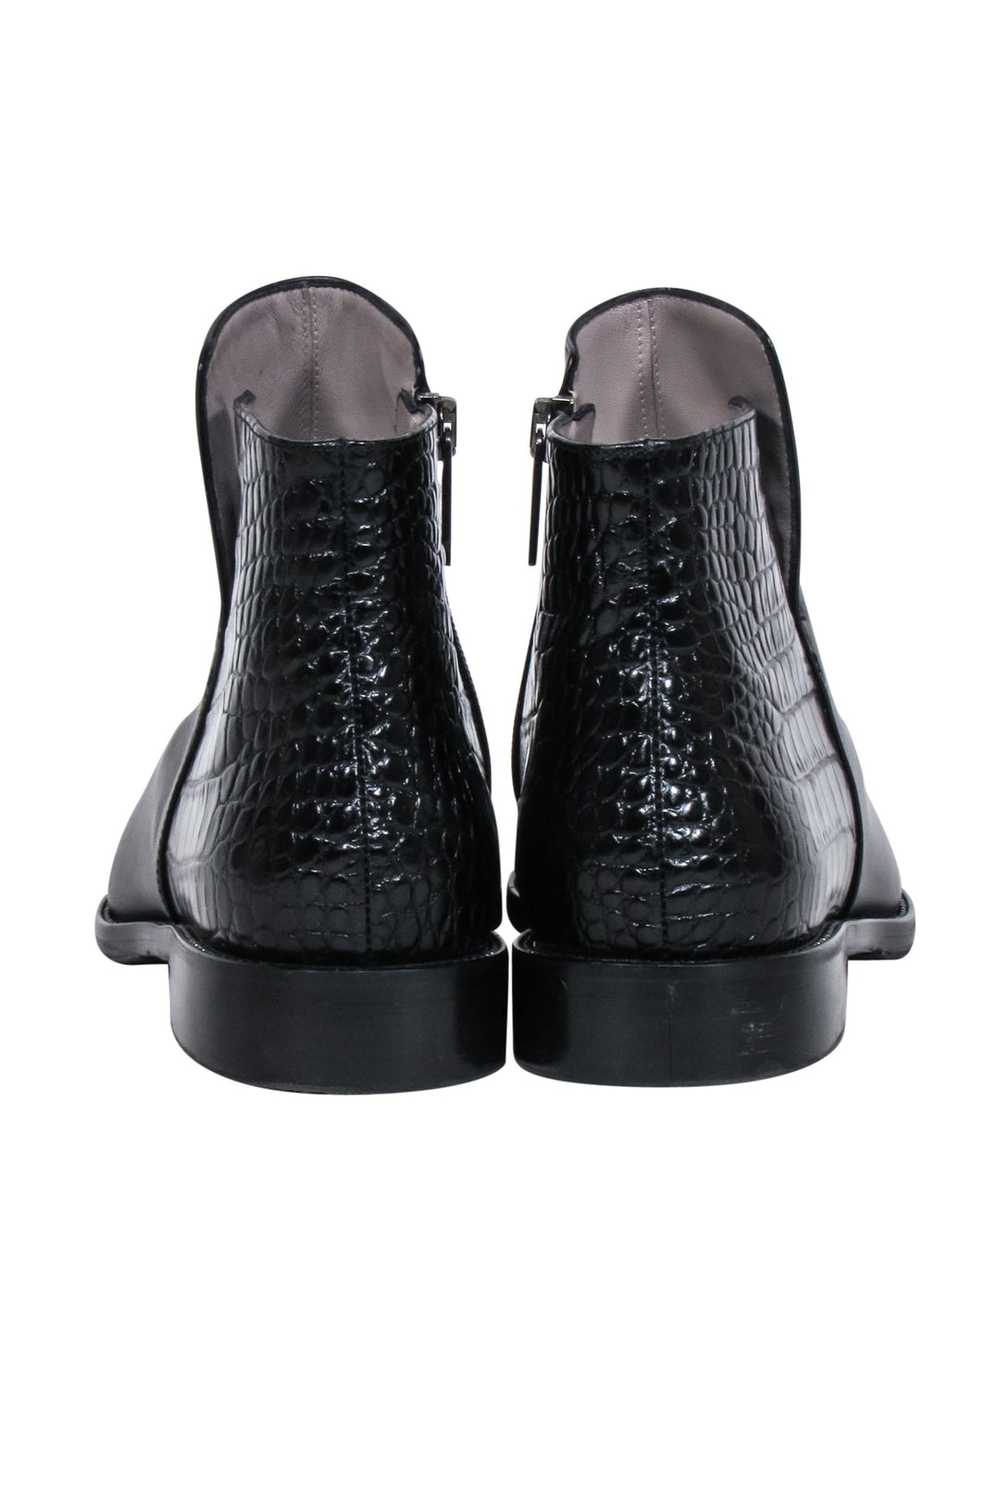 Aquatalia - Black Leather Pointed-Toe Short Boots… - image 4